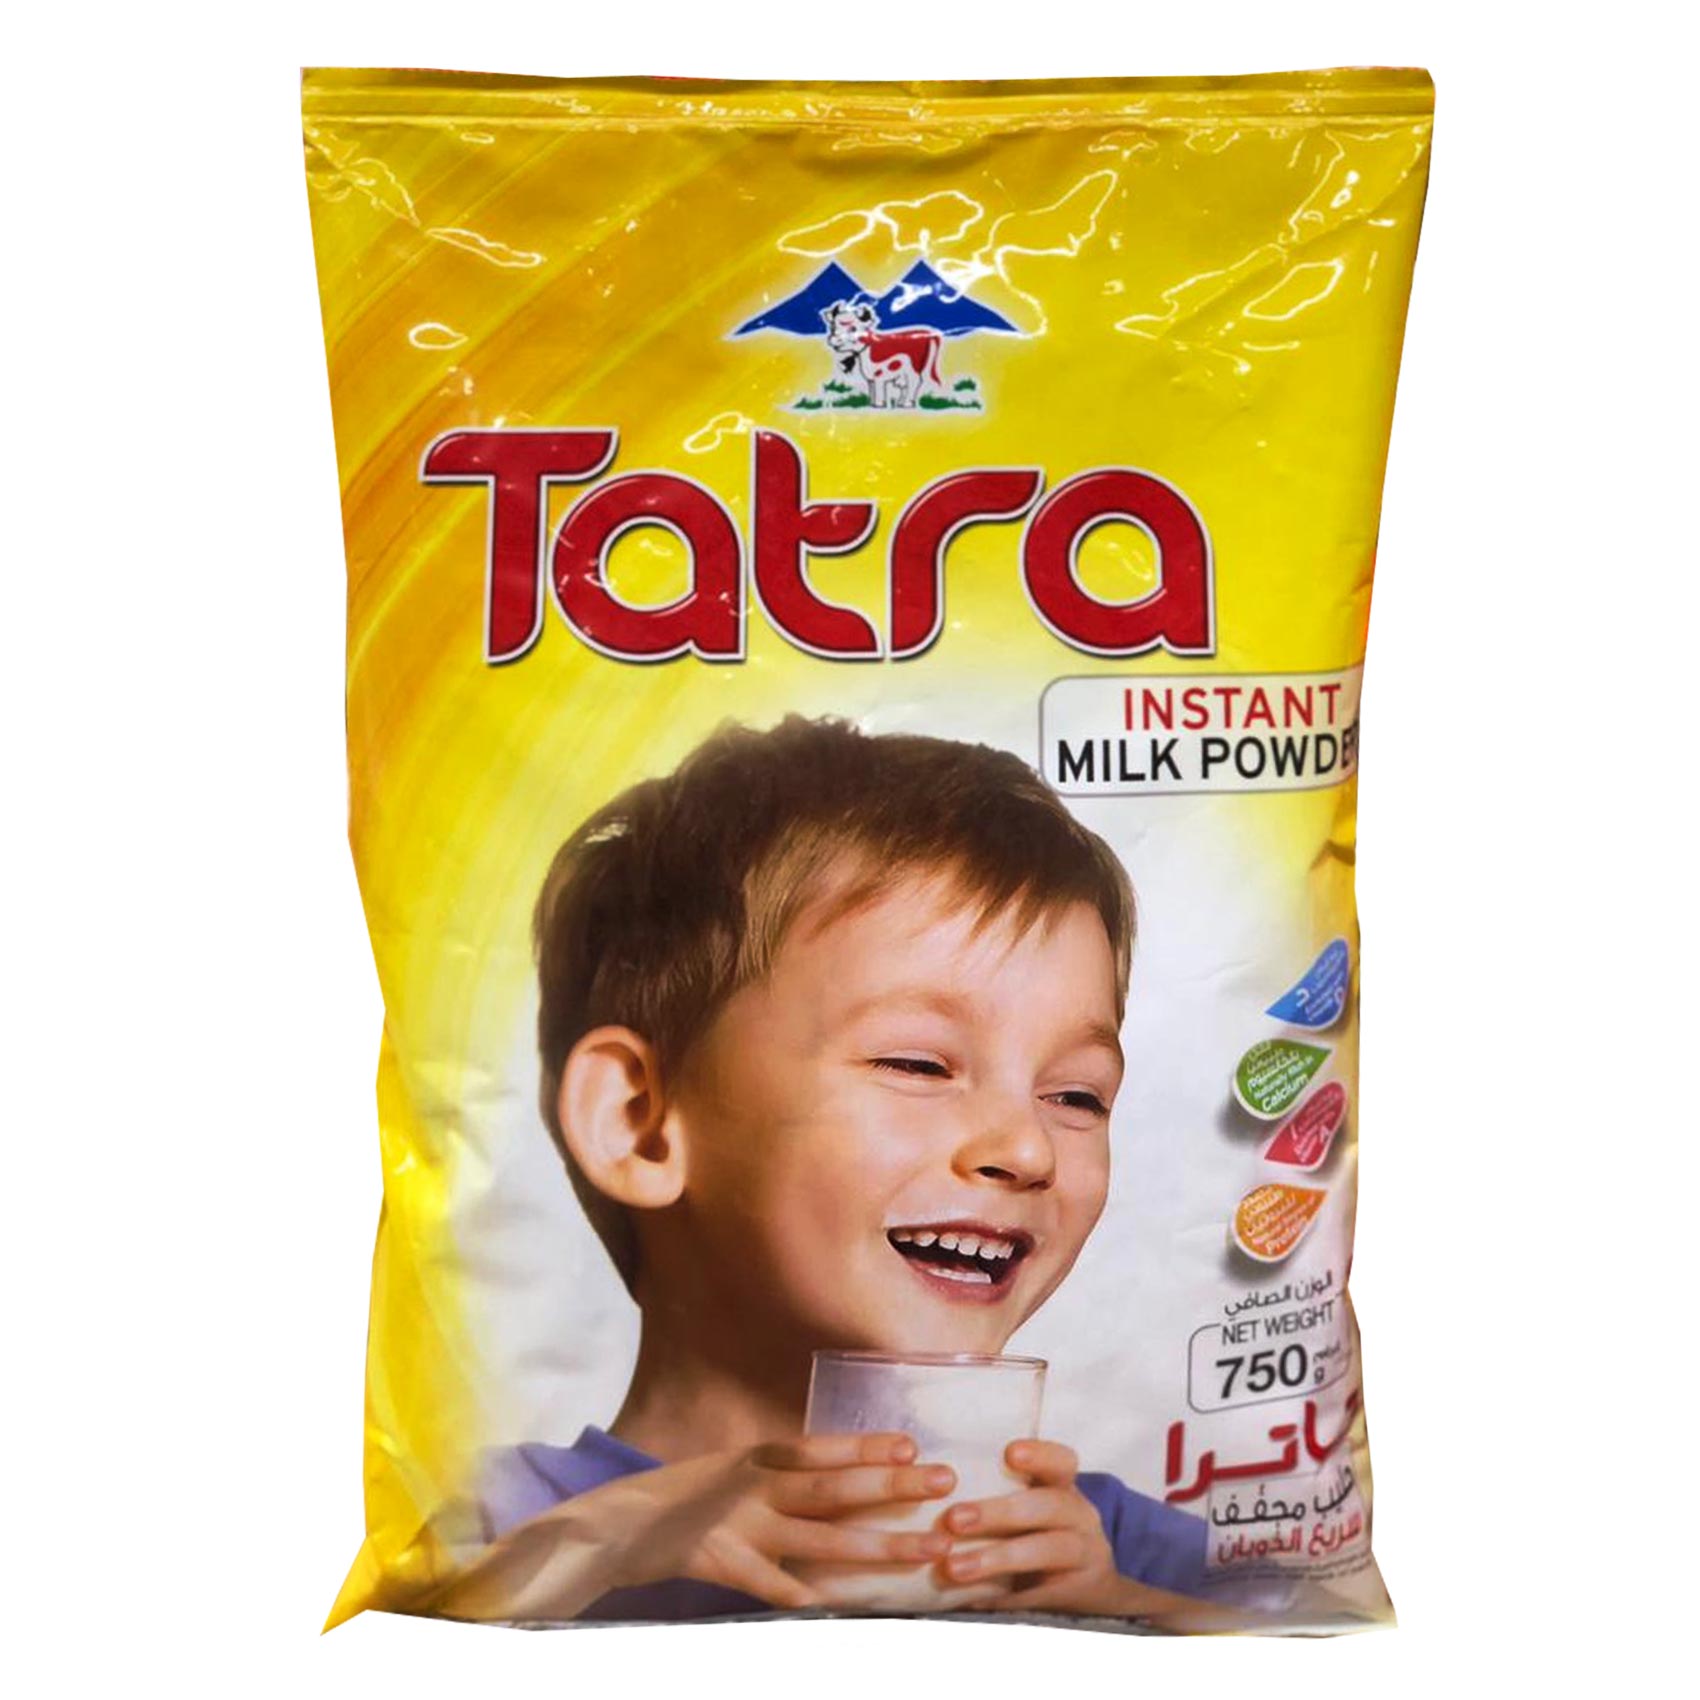 Tatra Instant Milk Powder 750g